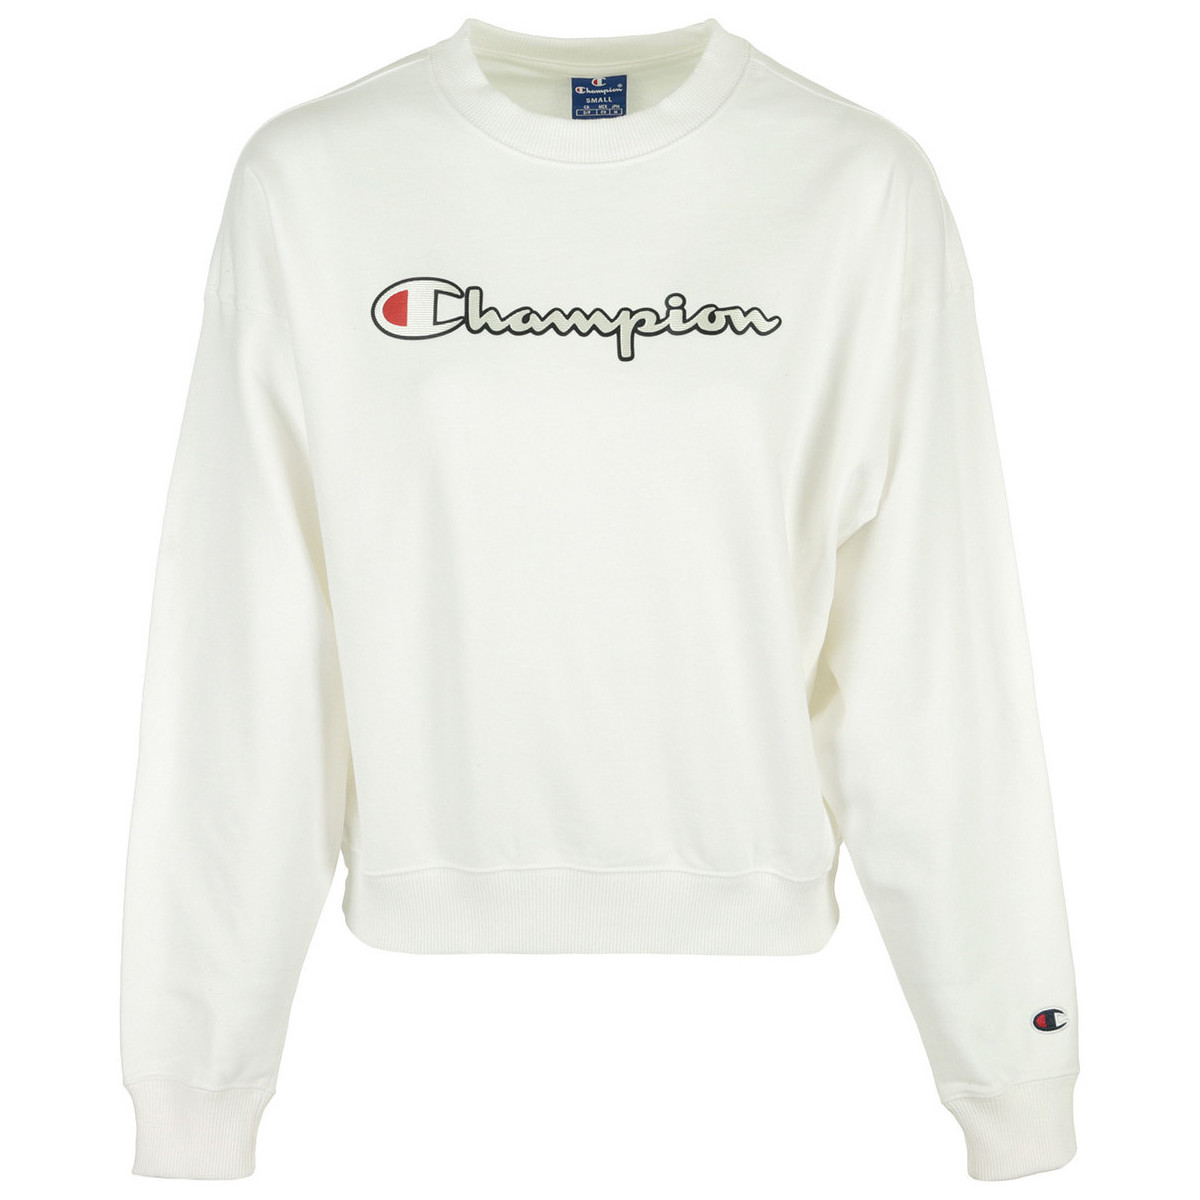 Textiel Dames Sweaters / Sweatshirts Champion Crewneck Sweatshirt Wit